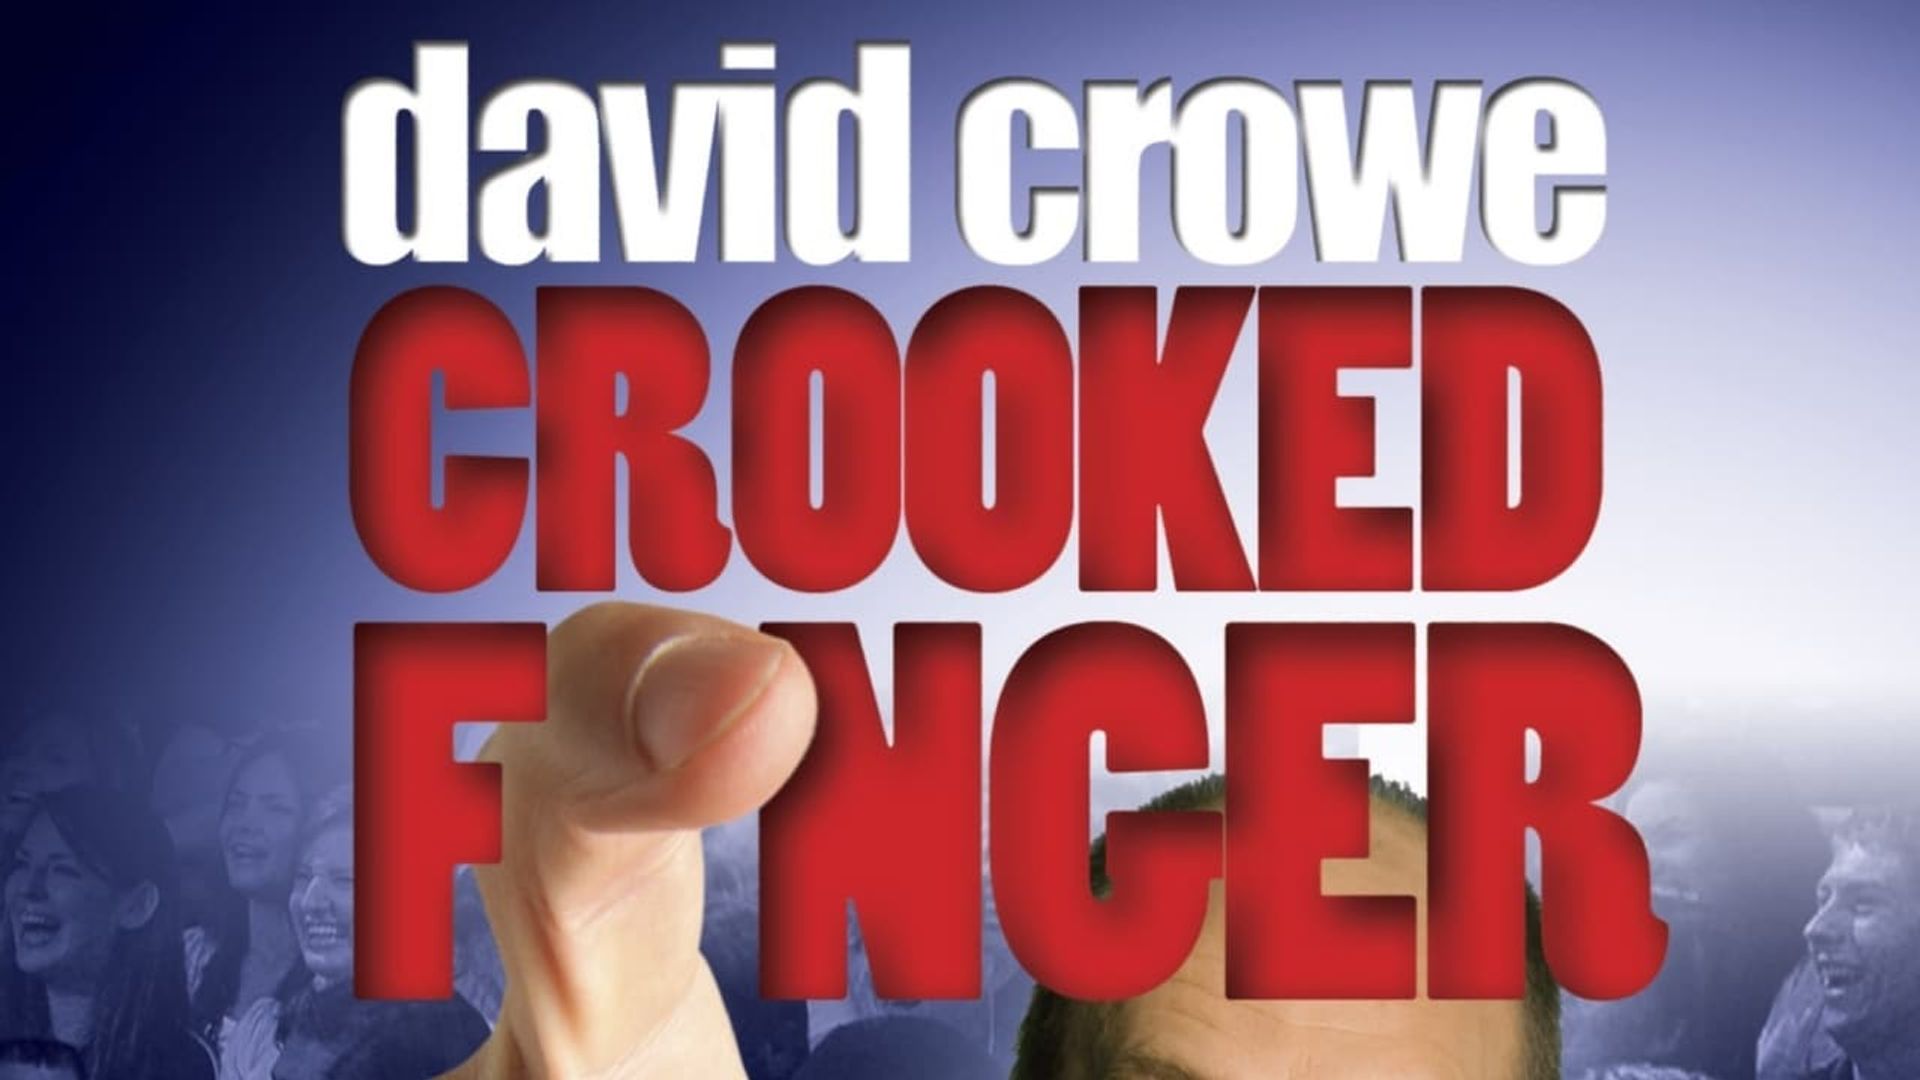 David Crowe: Crooked Finger background